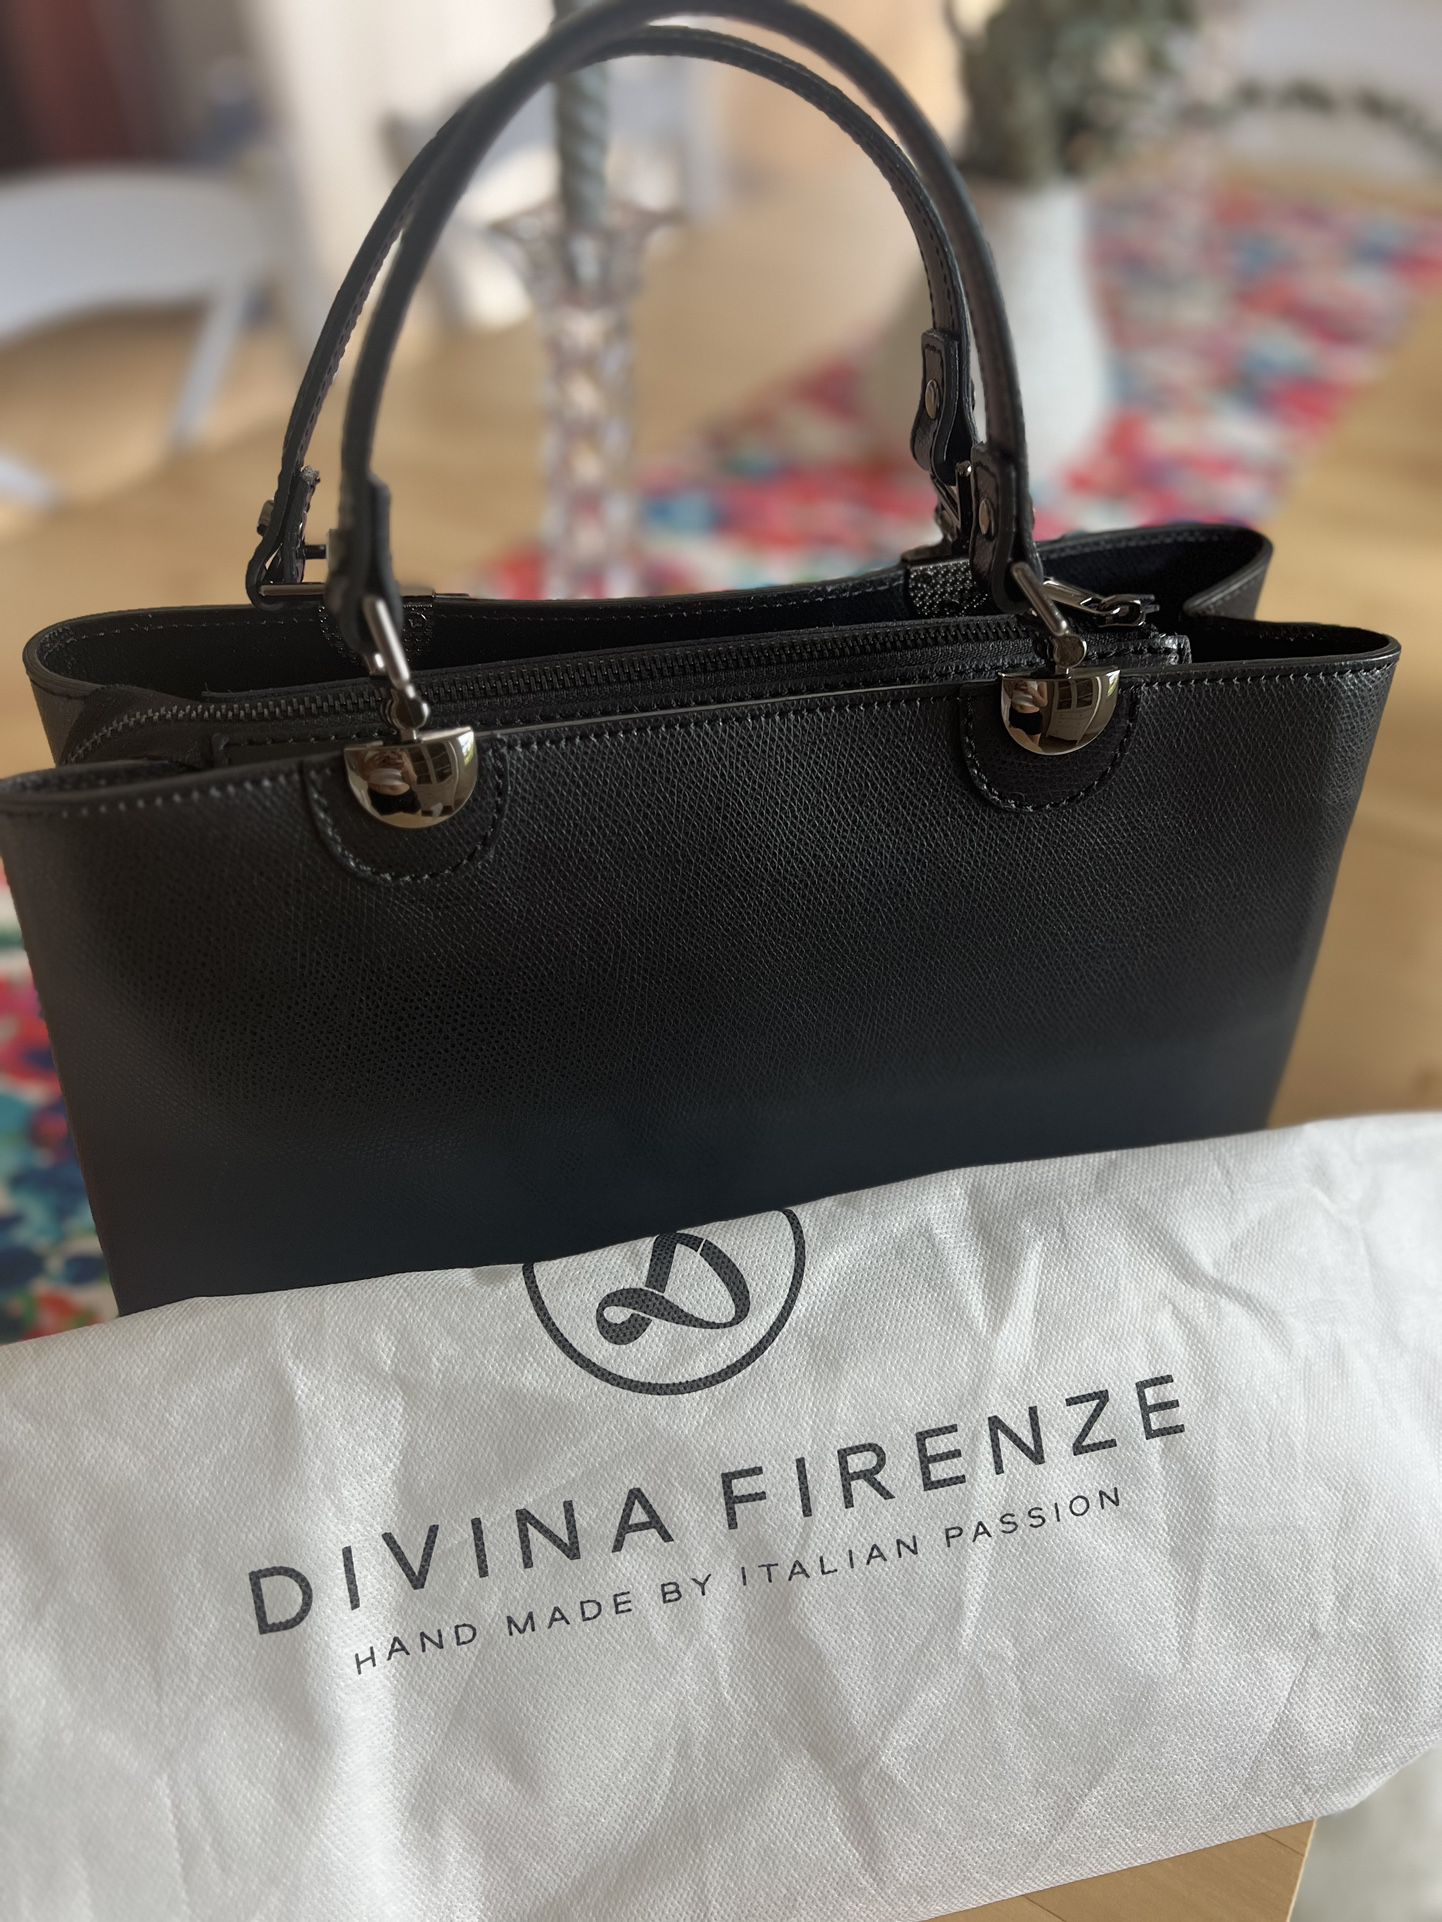 Divina Firenze Italy Leather Women’s Purse, Bag, Black, 